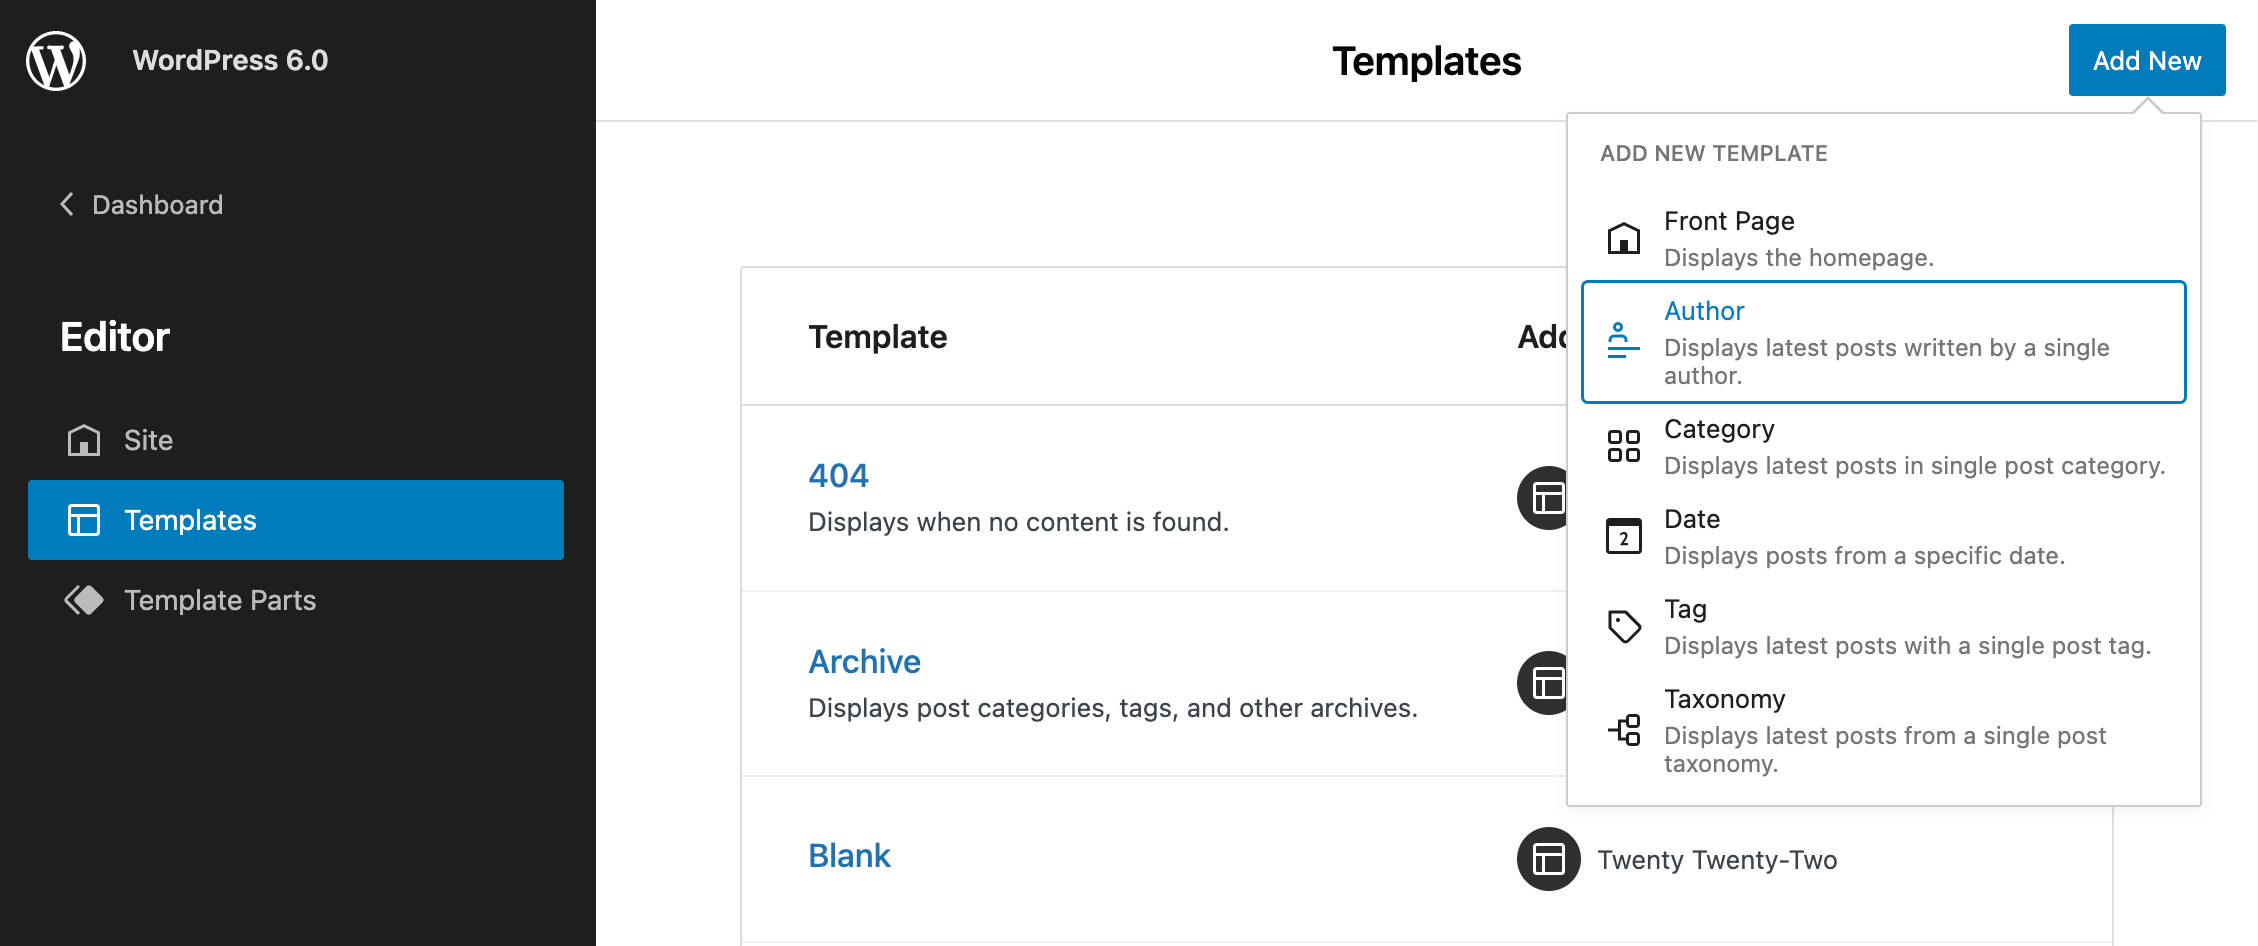 A screenshot showing templates in WordPress 6.0.